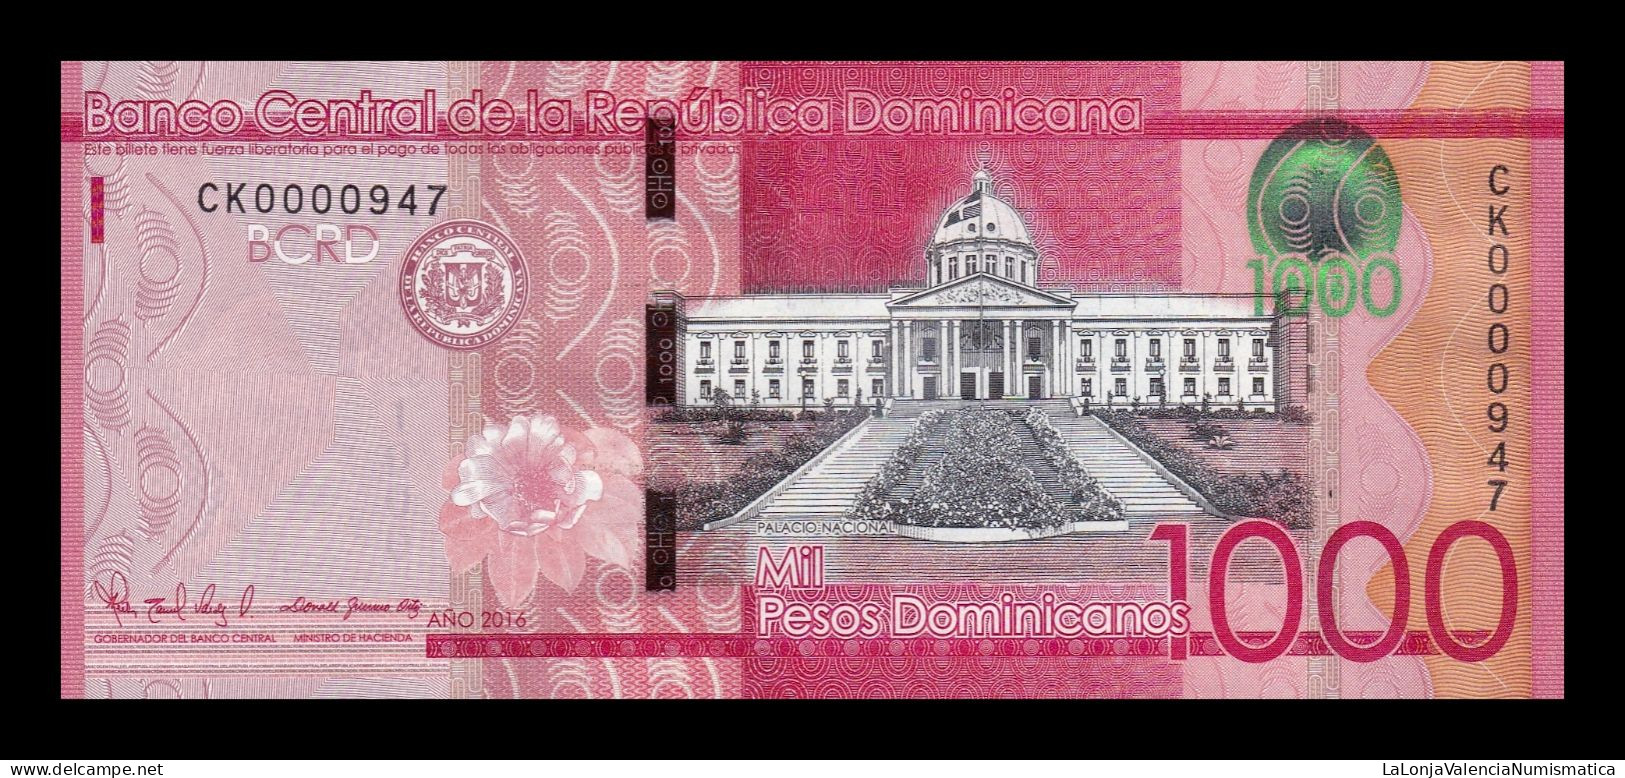 República Dominicana 1000 Pesos Dominicanos 2016 Pick 193c Low Serial 947 Sc Unc - Dominicana